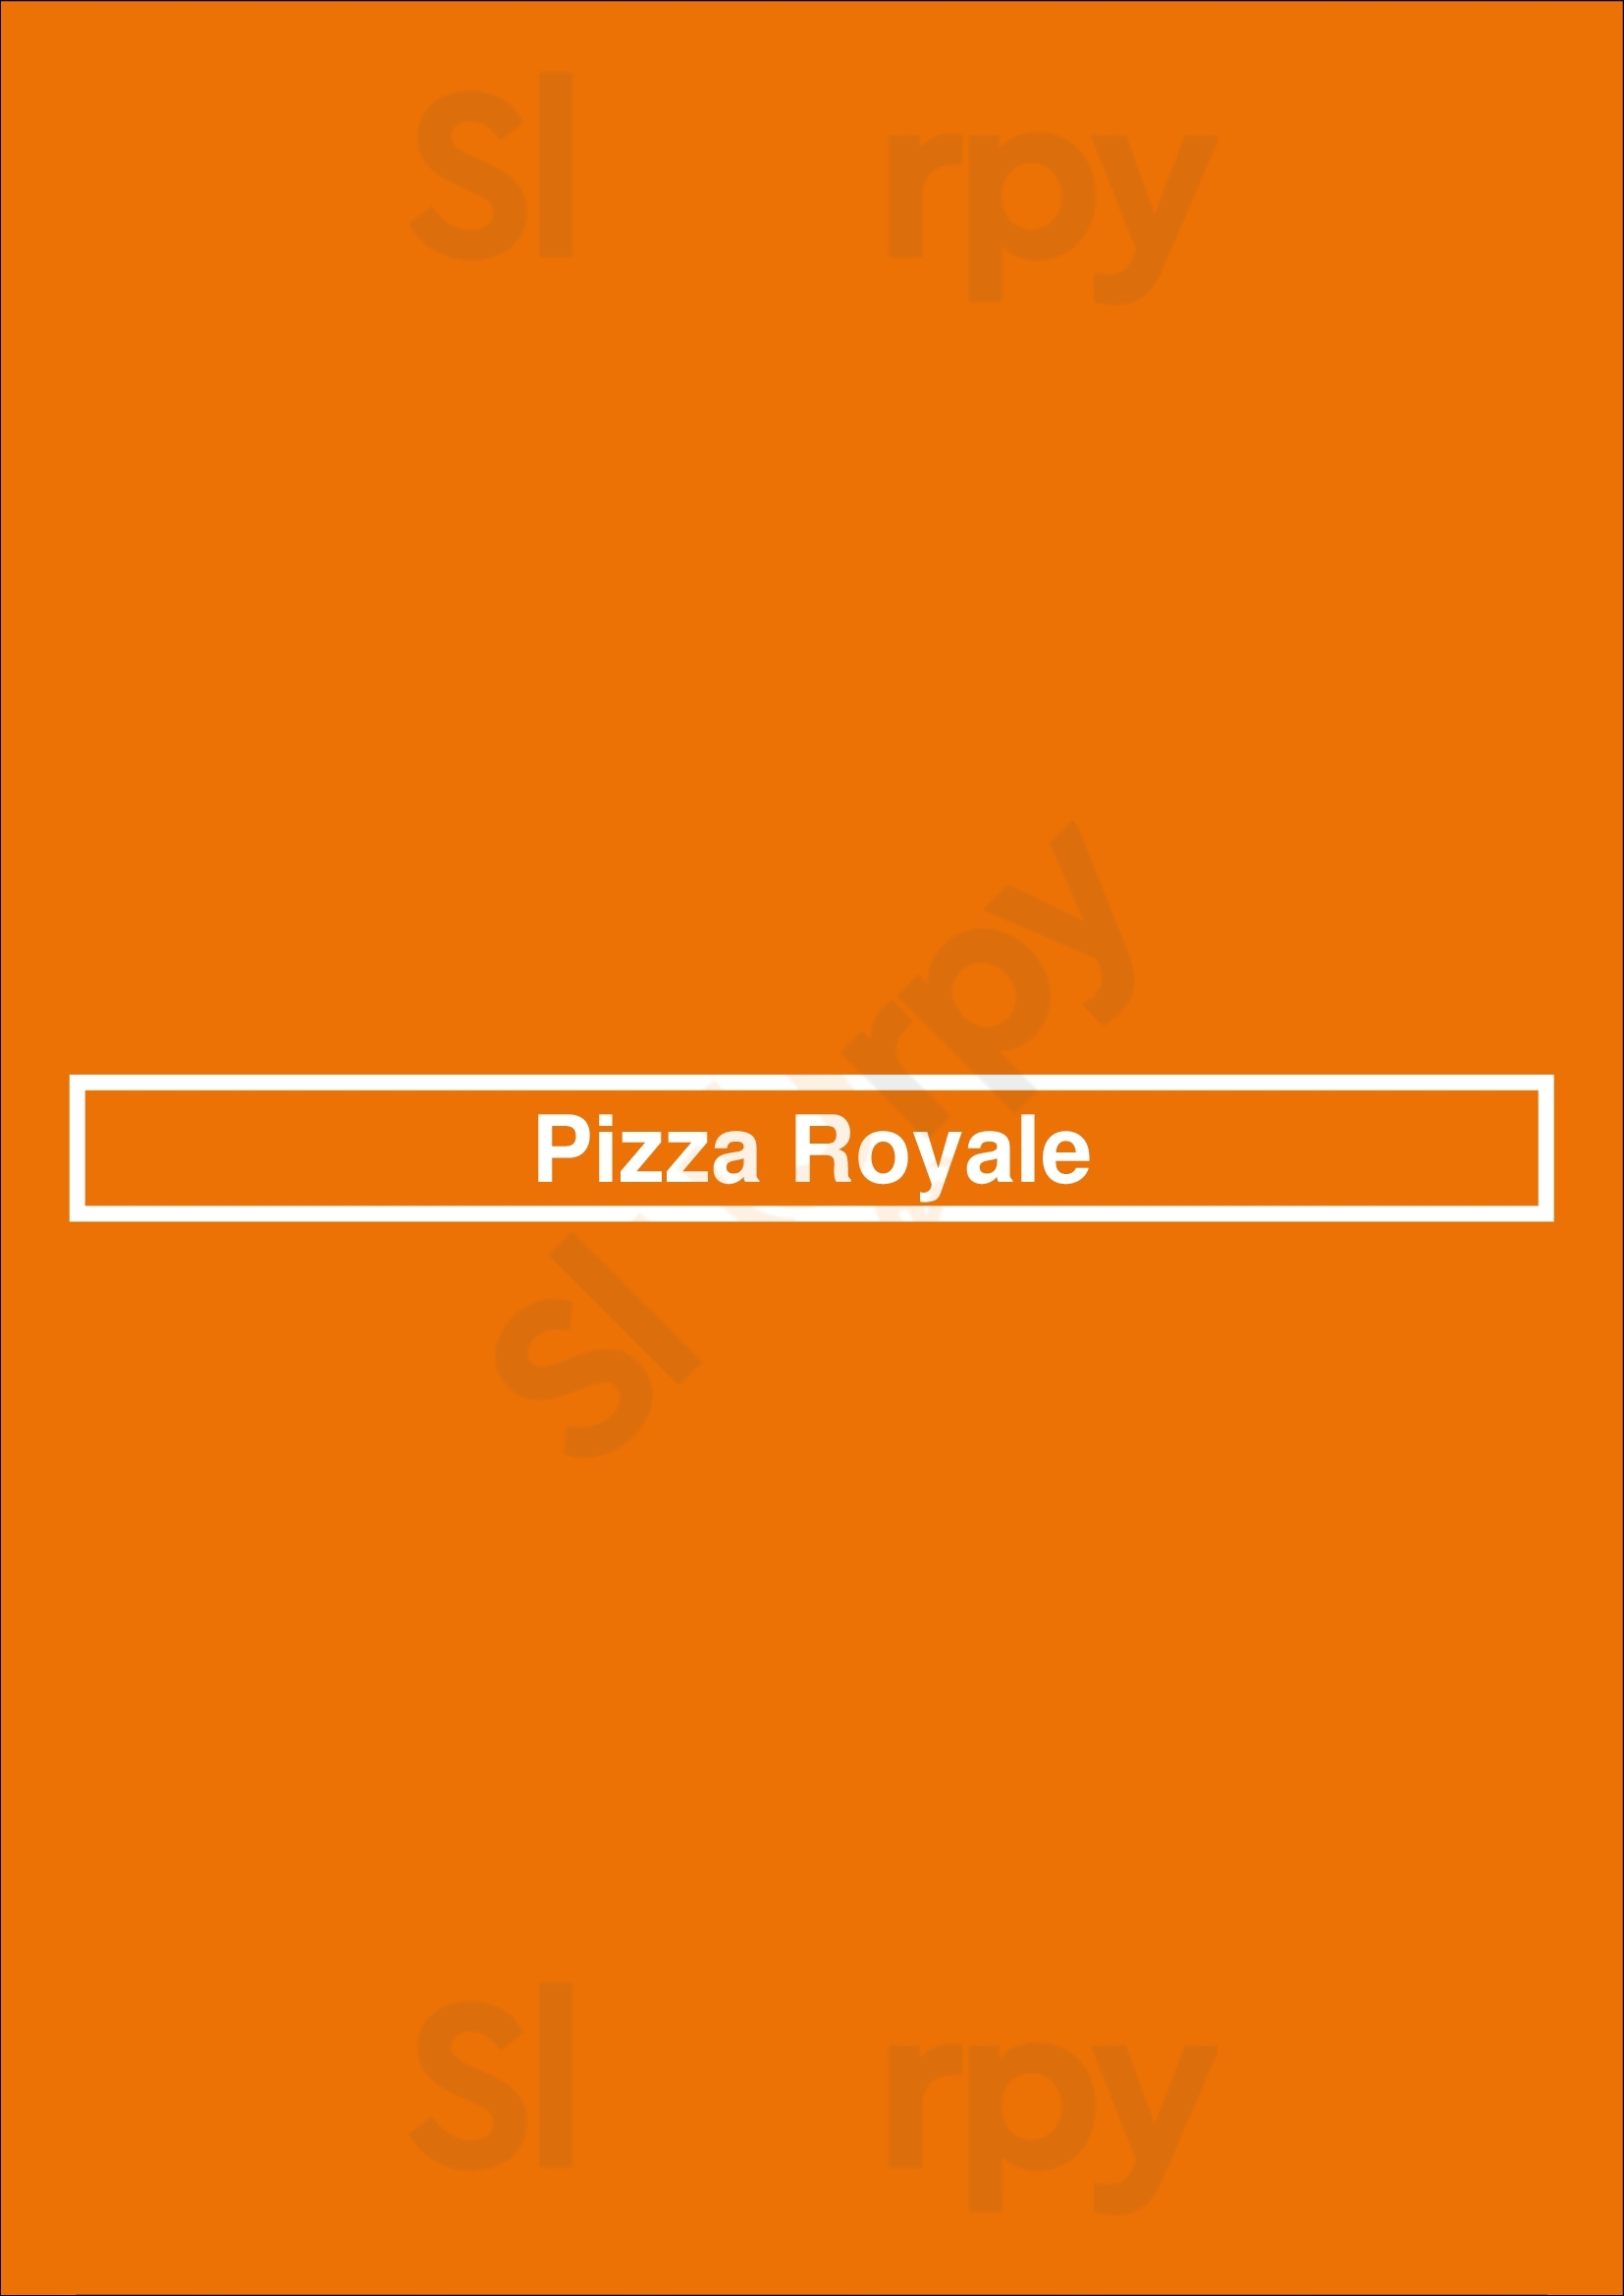 Pizza Royale Middlesbrough Menu - 1